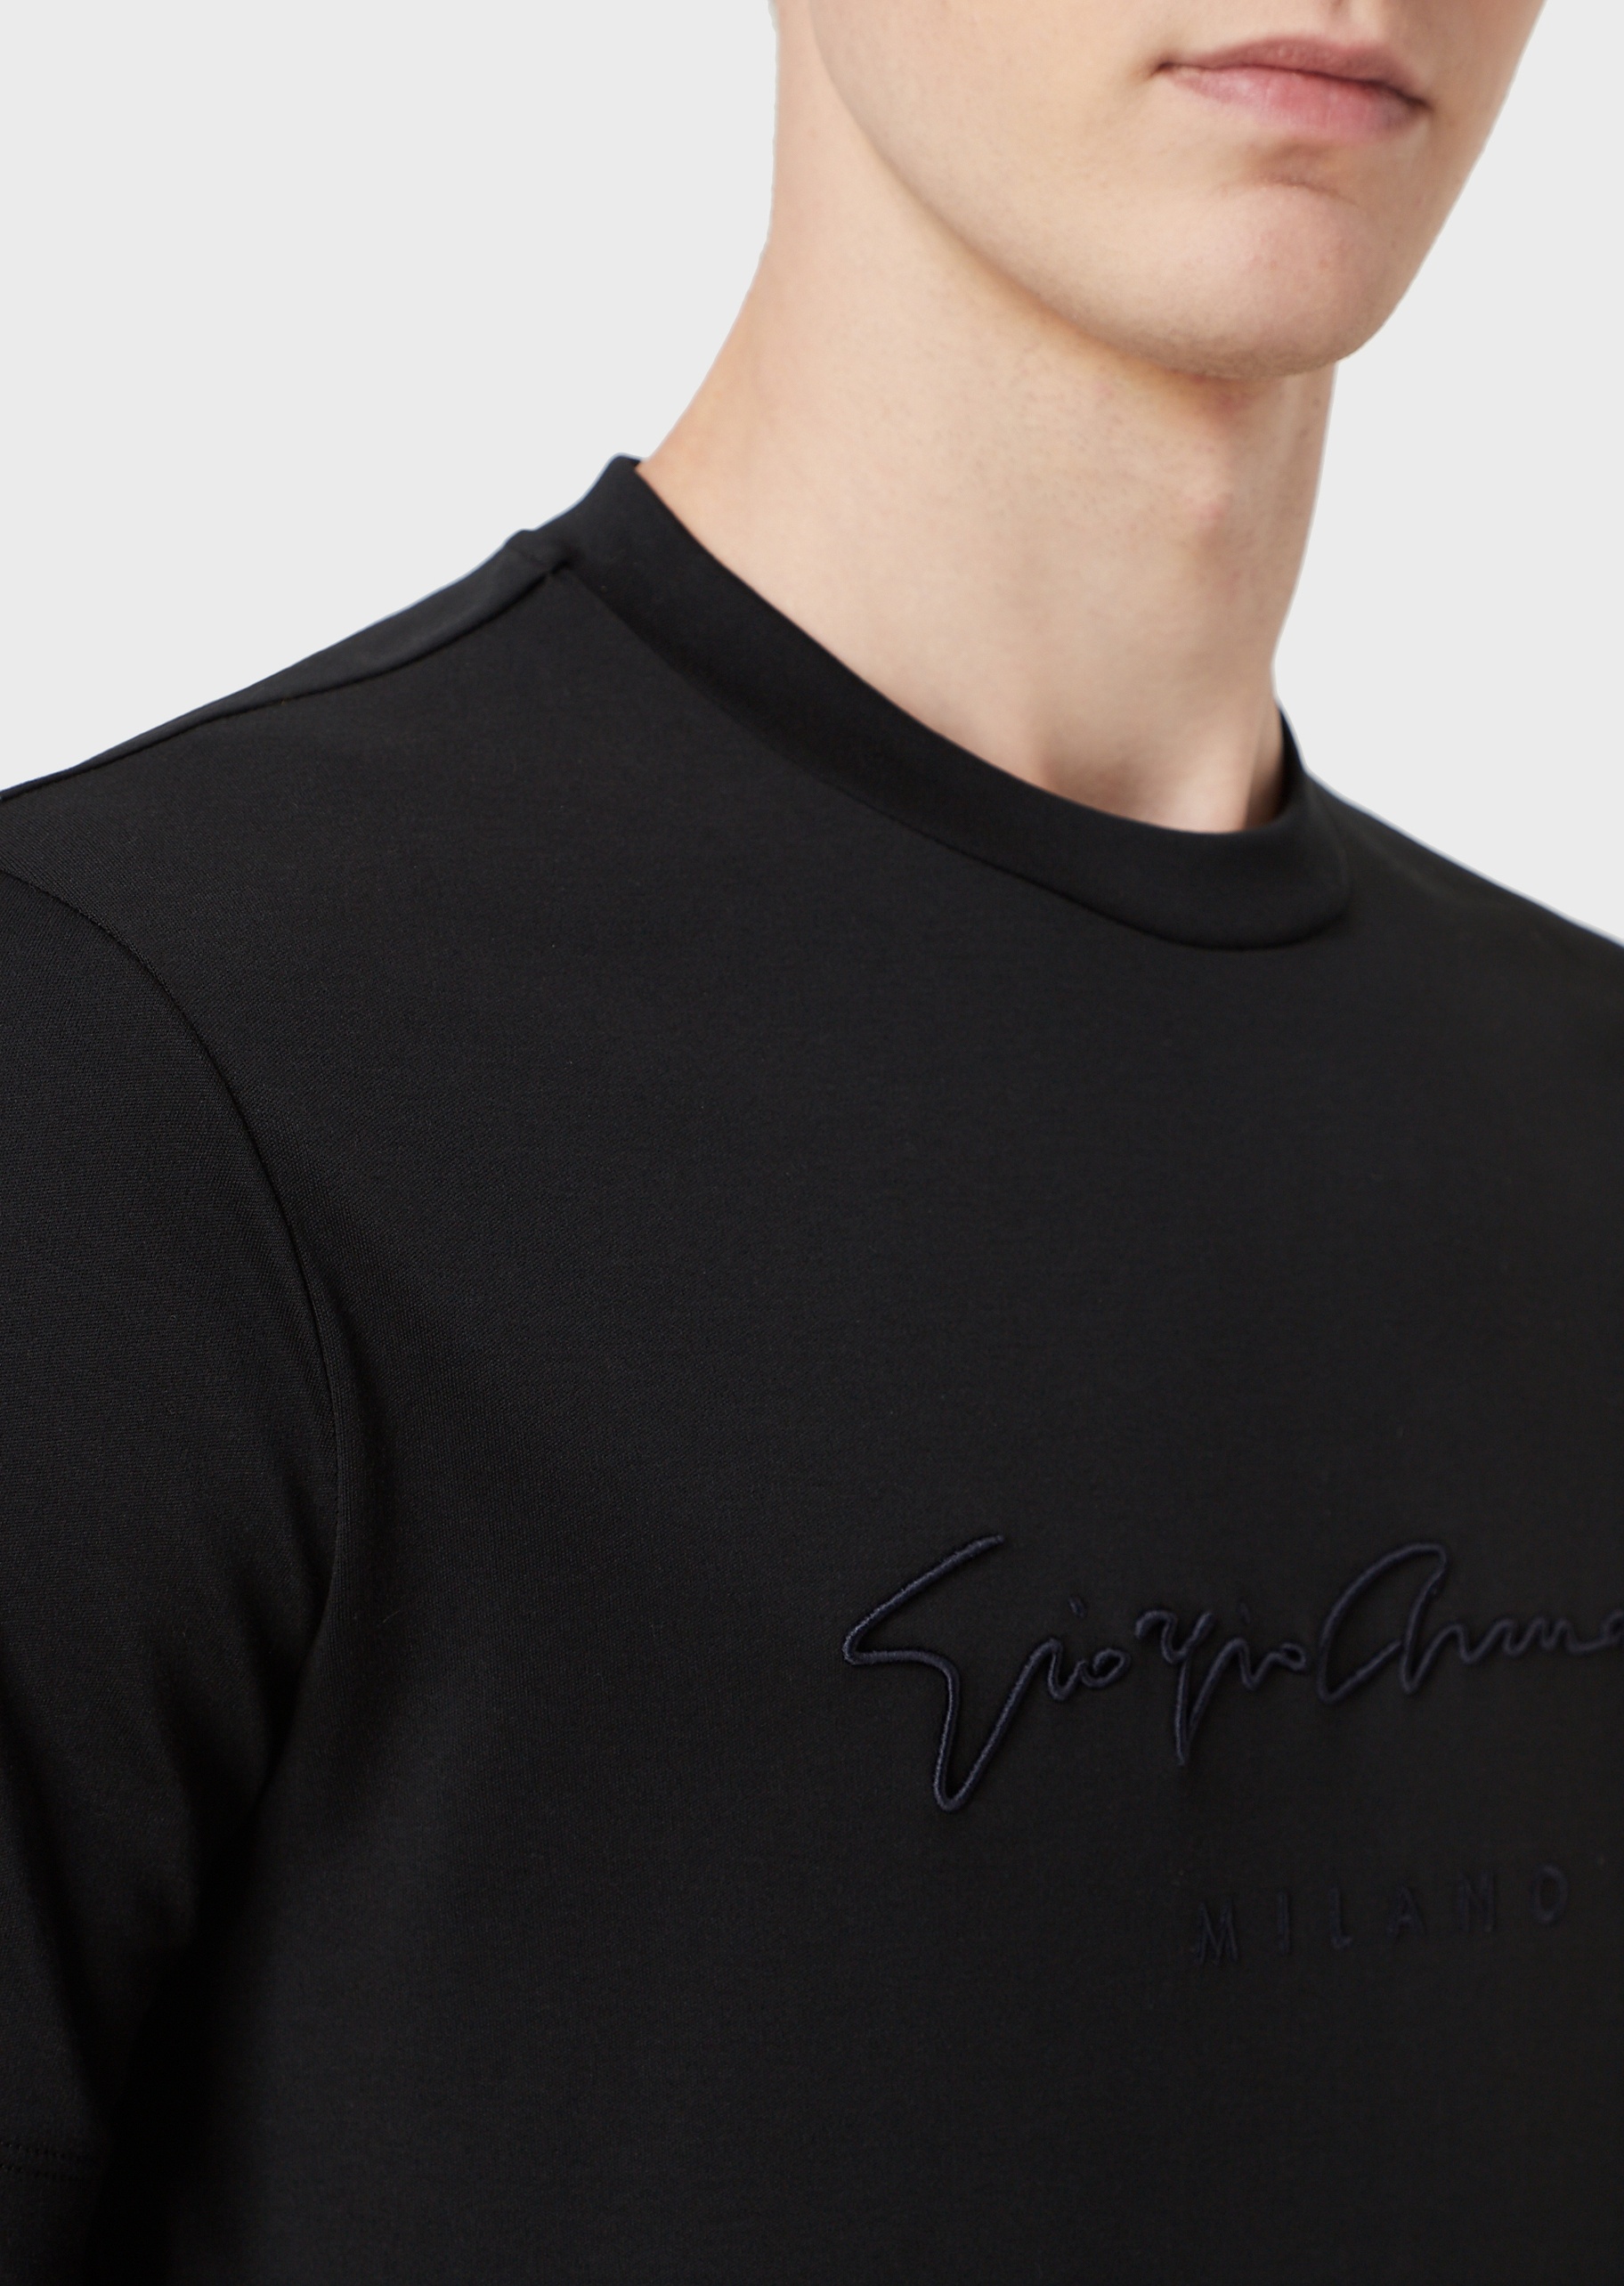 Giorgio Armani 字母刺绣标识T恤